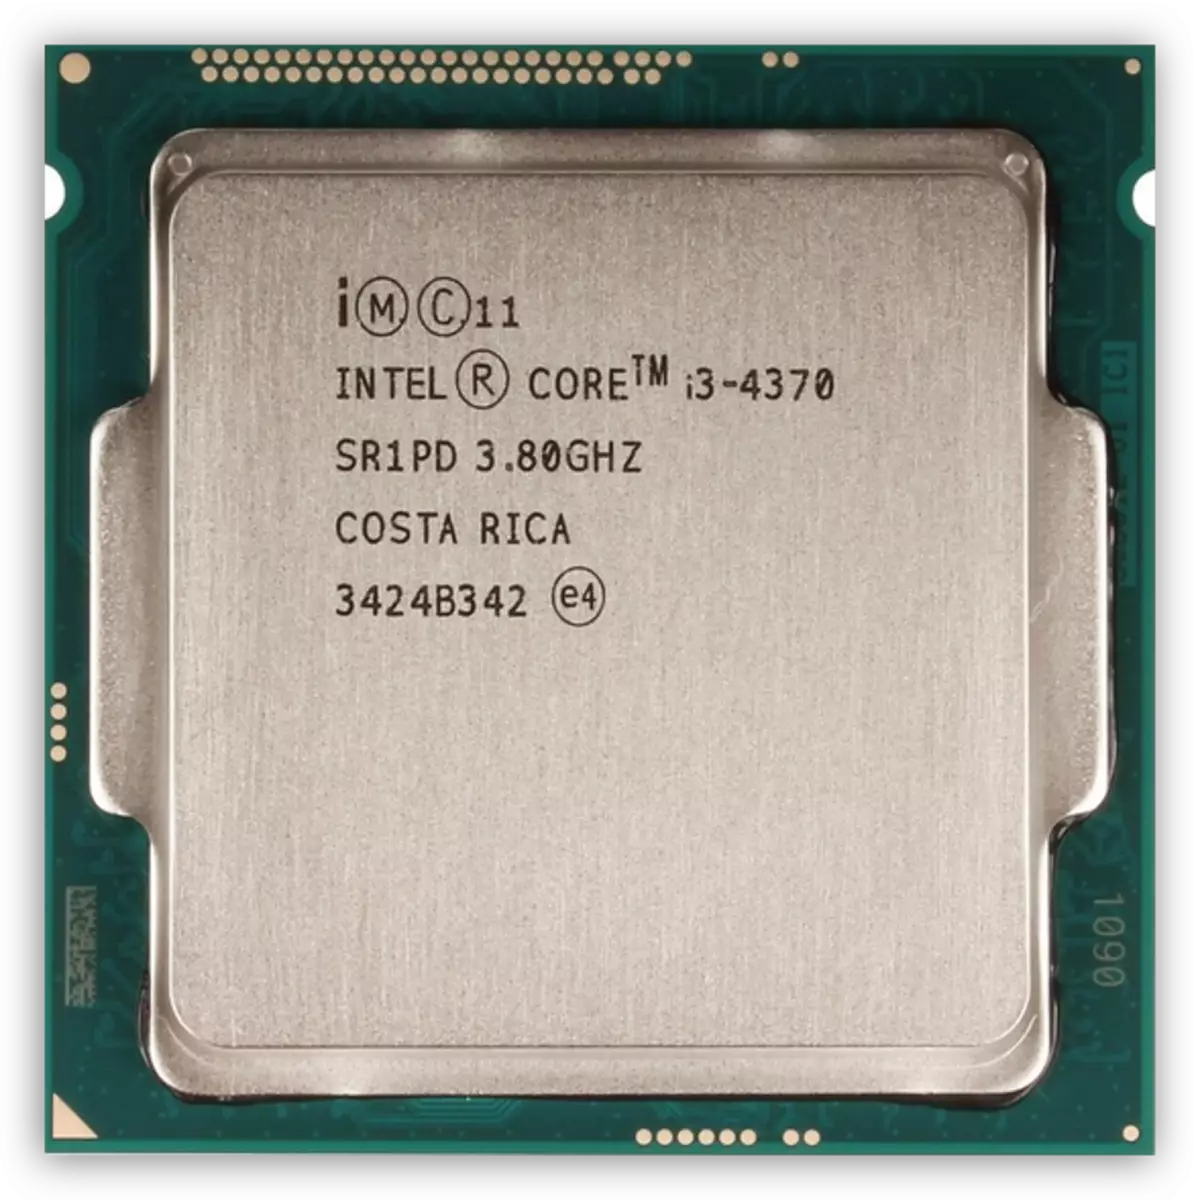 Core i3-4370 prosesor pusat pada arsitektur Haswell